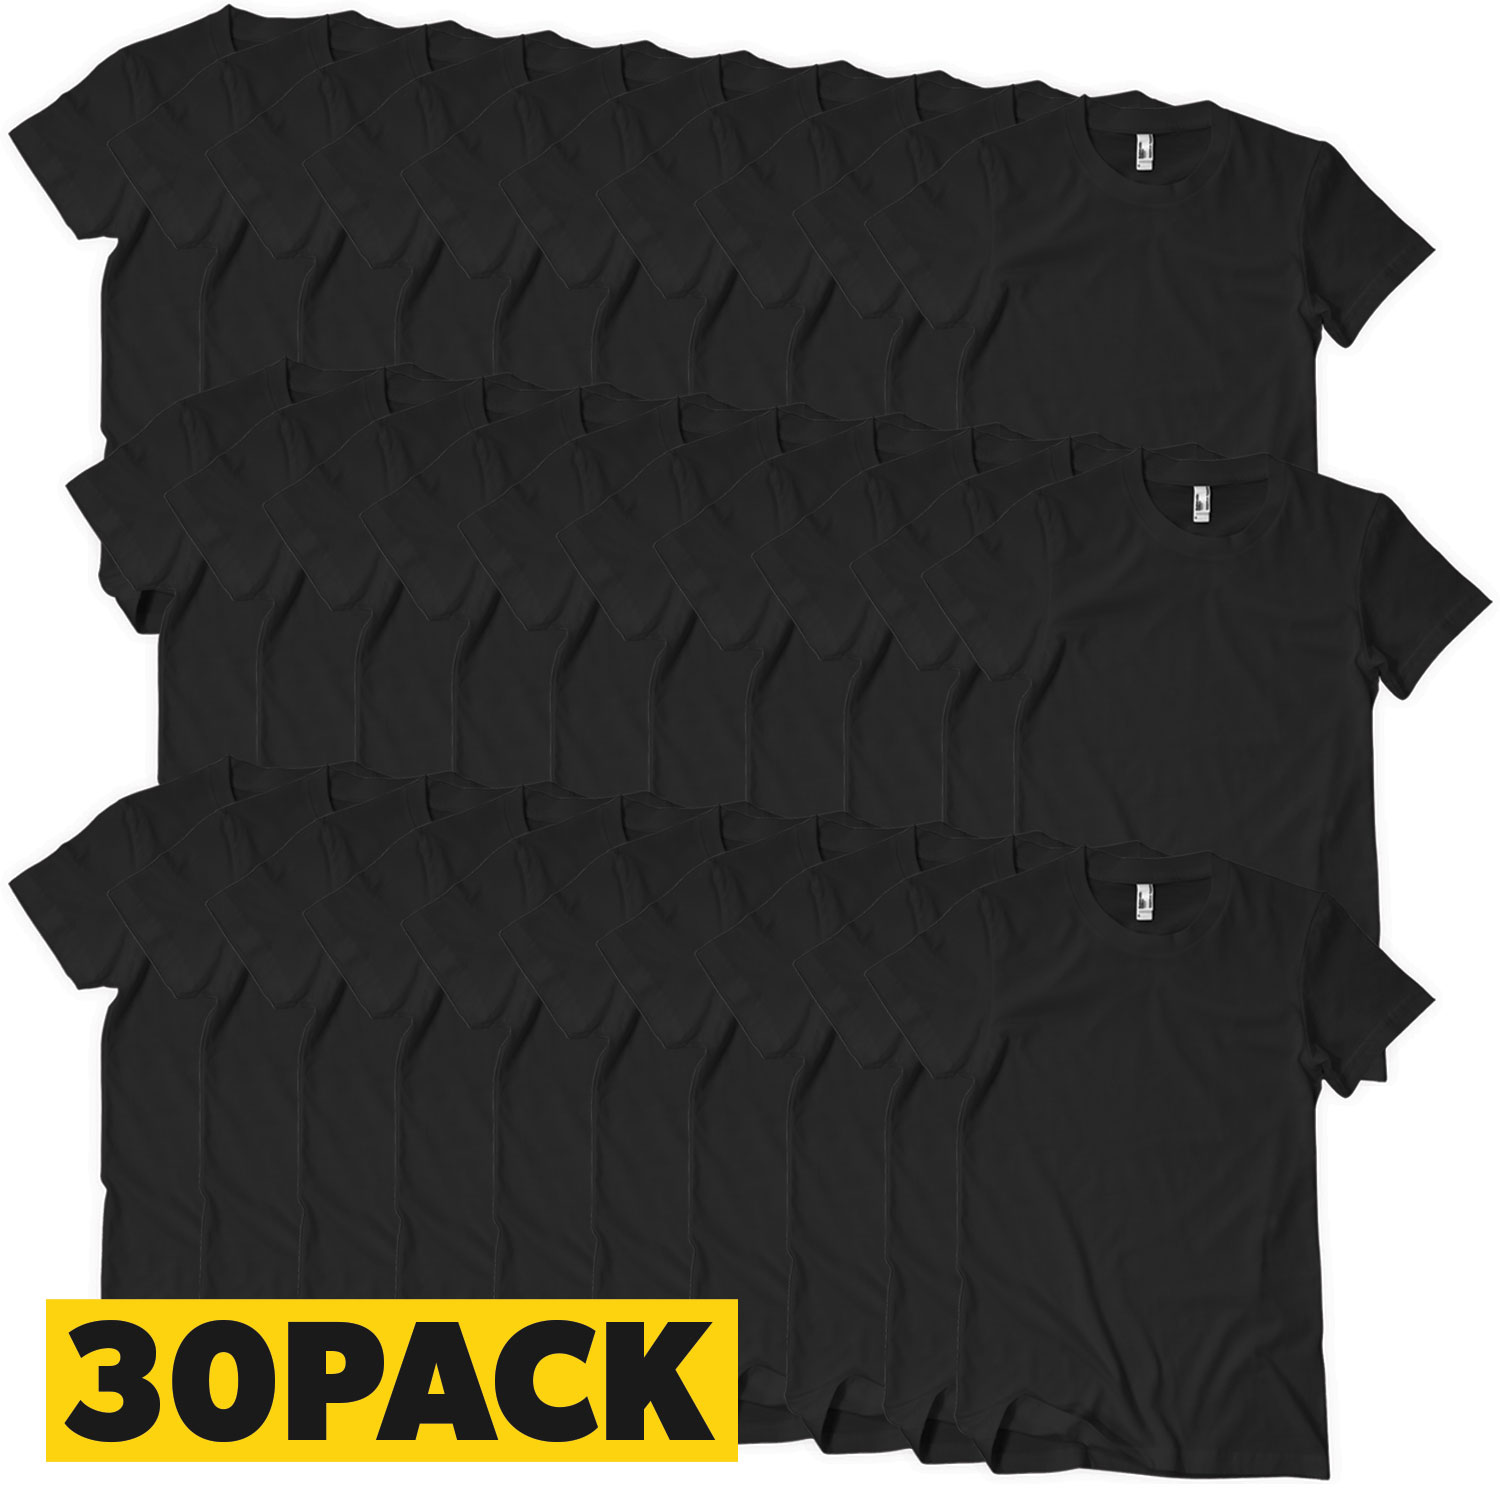 T-Shirts Megapack Black - 30 pack